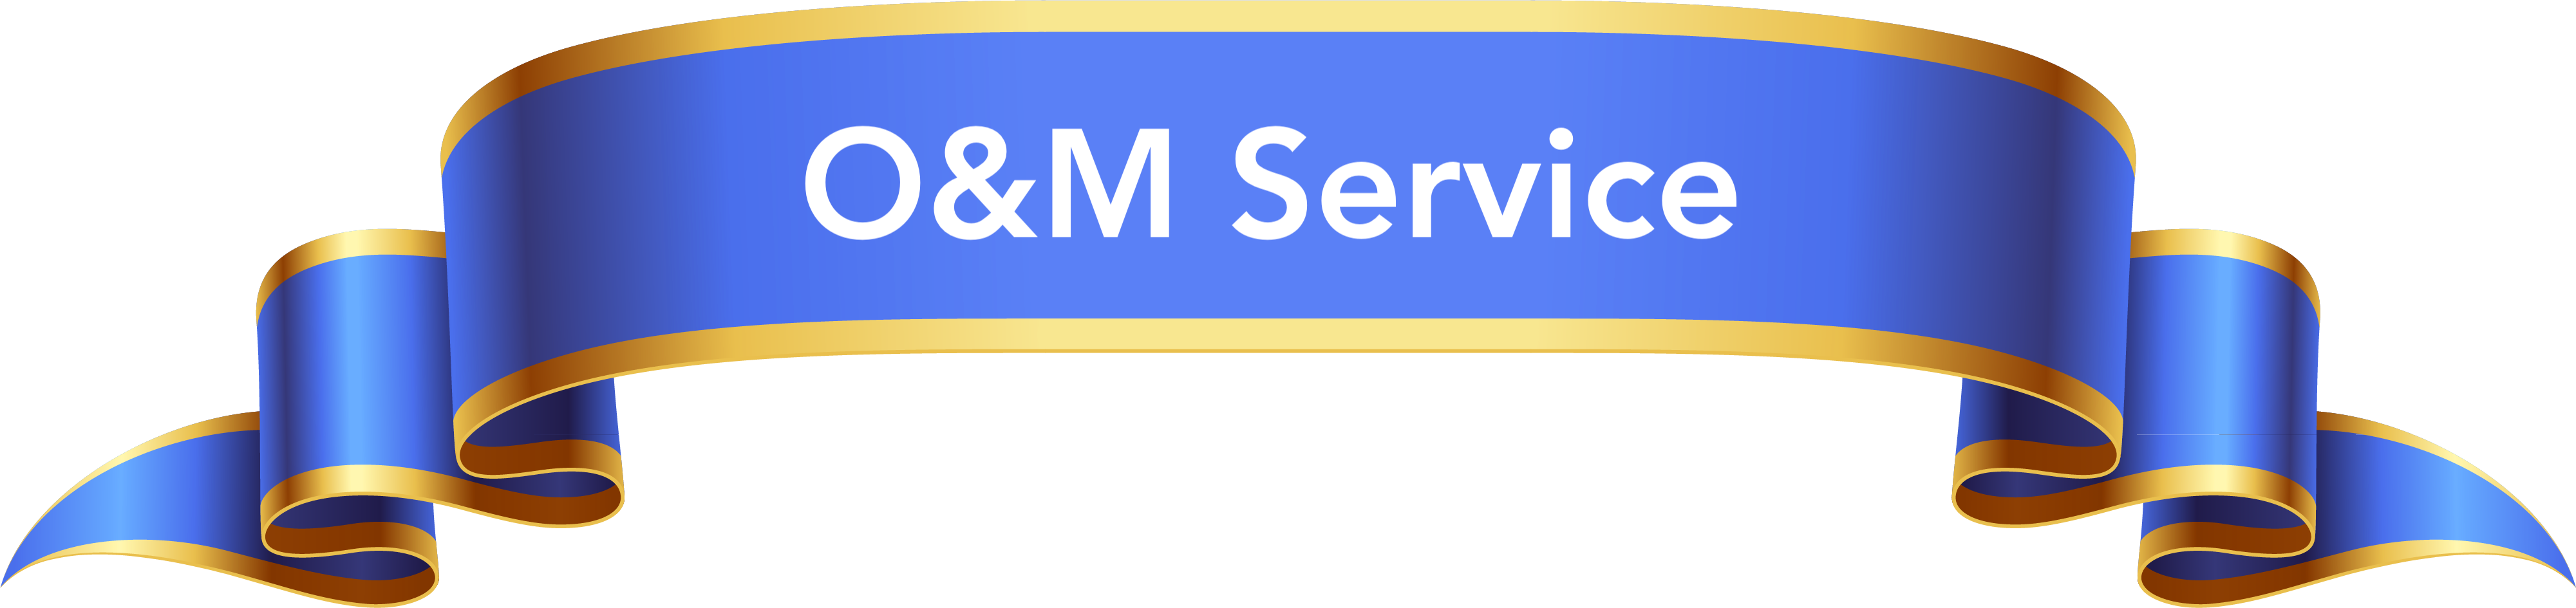 OM Service